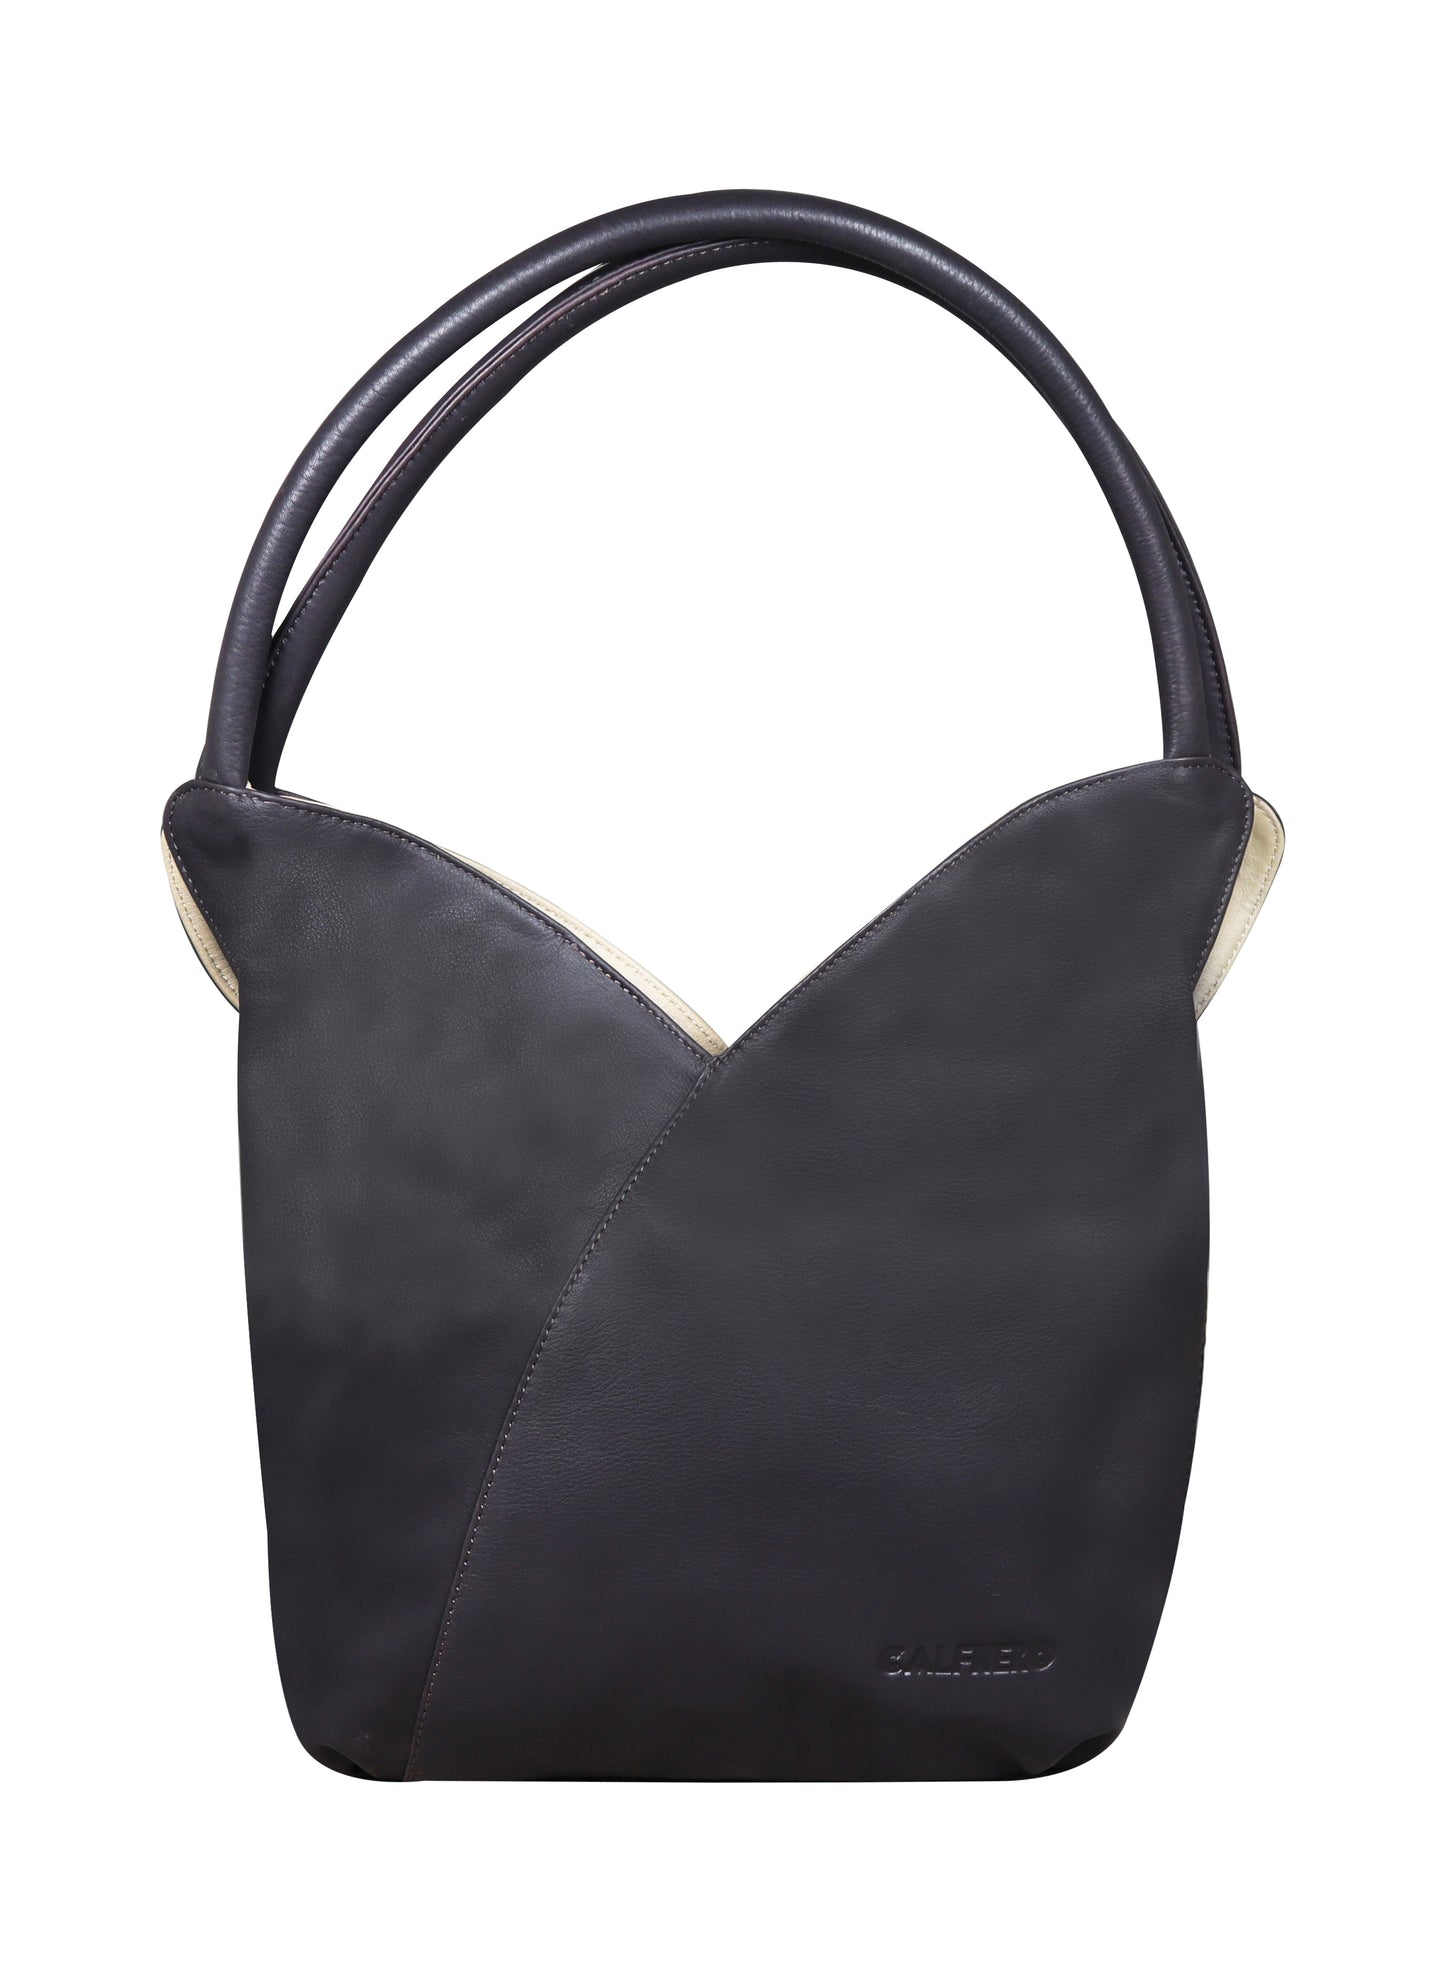 Calfnero Women's Genuine Leather Shoulder Bag (71370-Brown Beige)